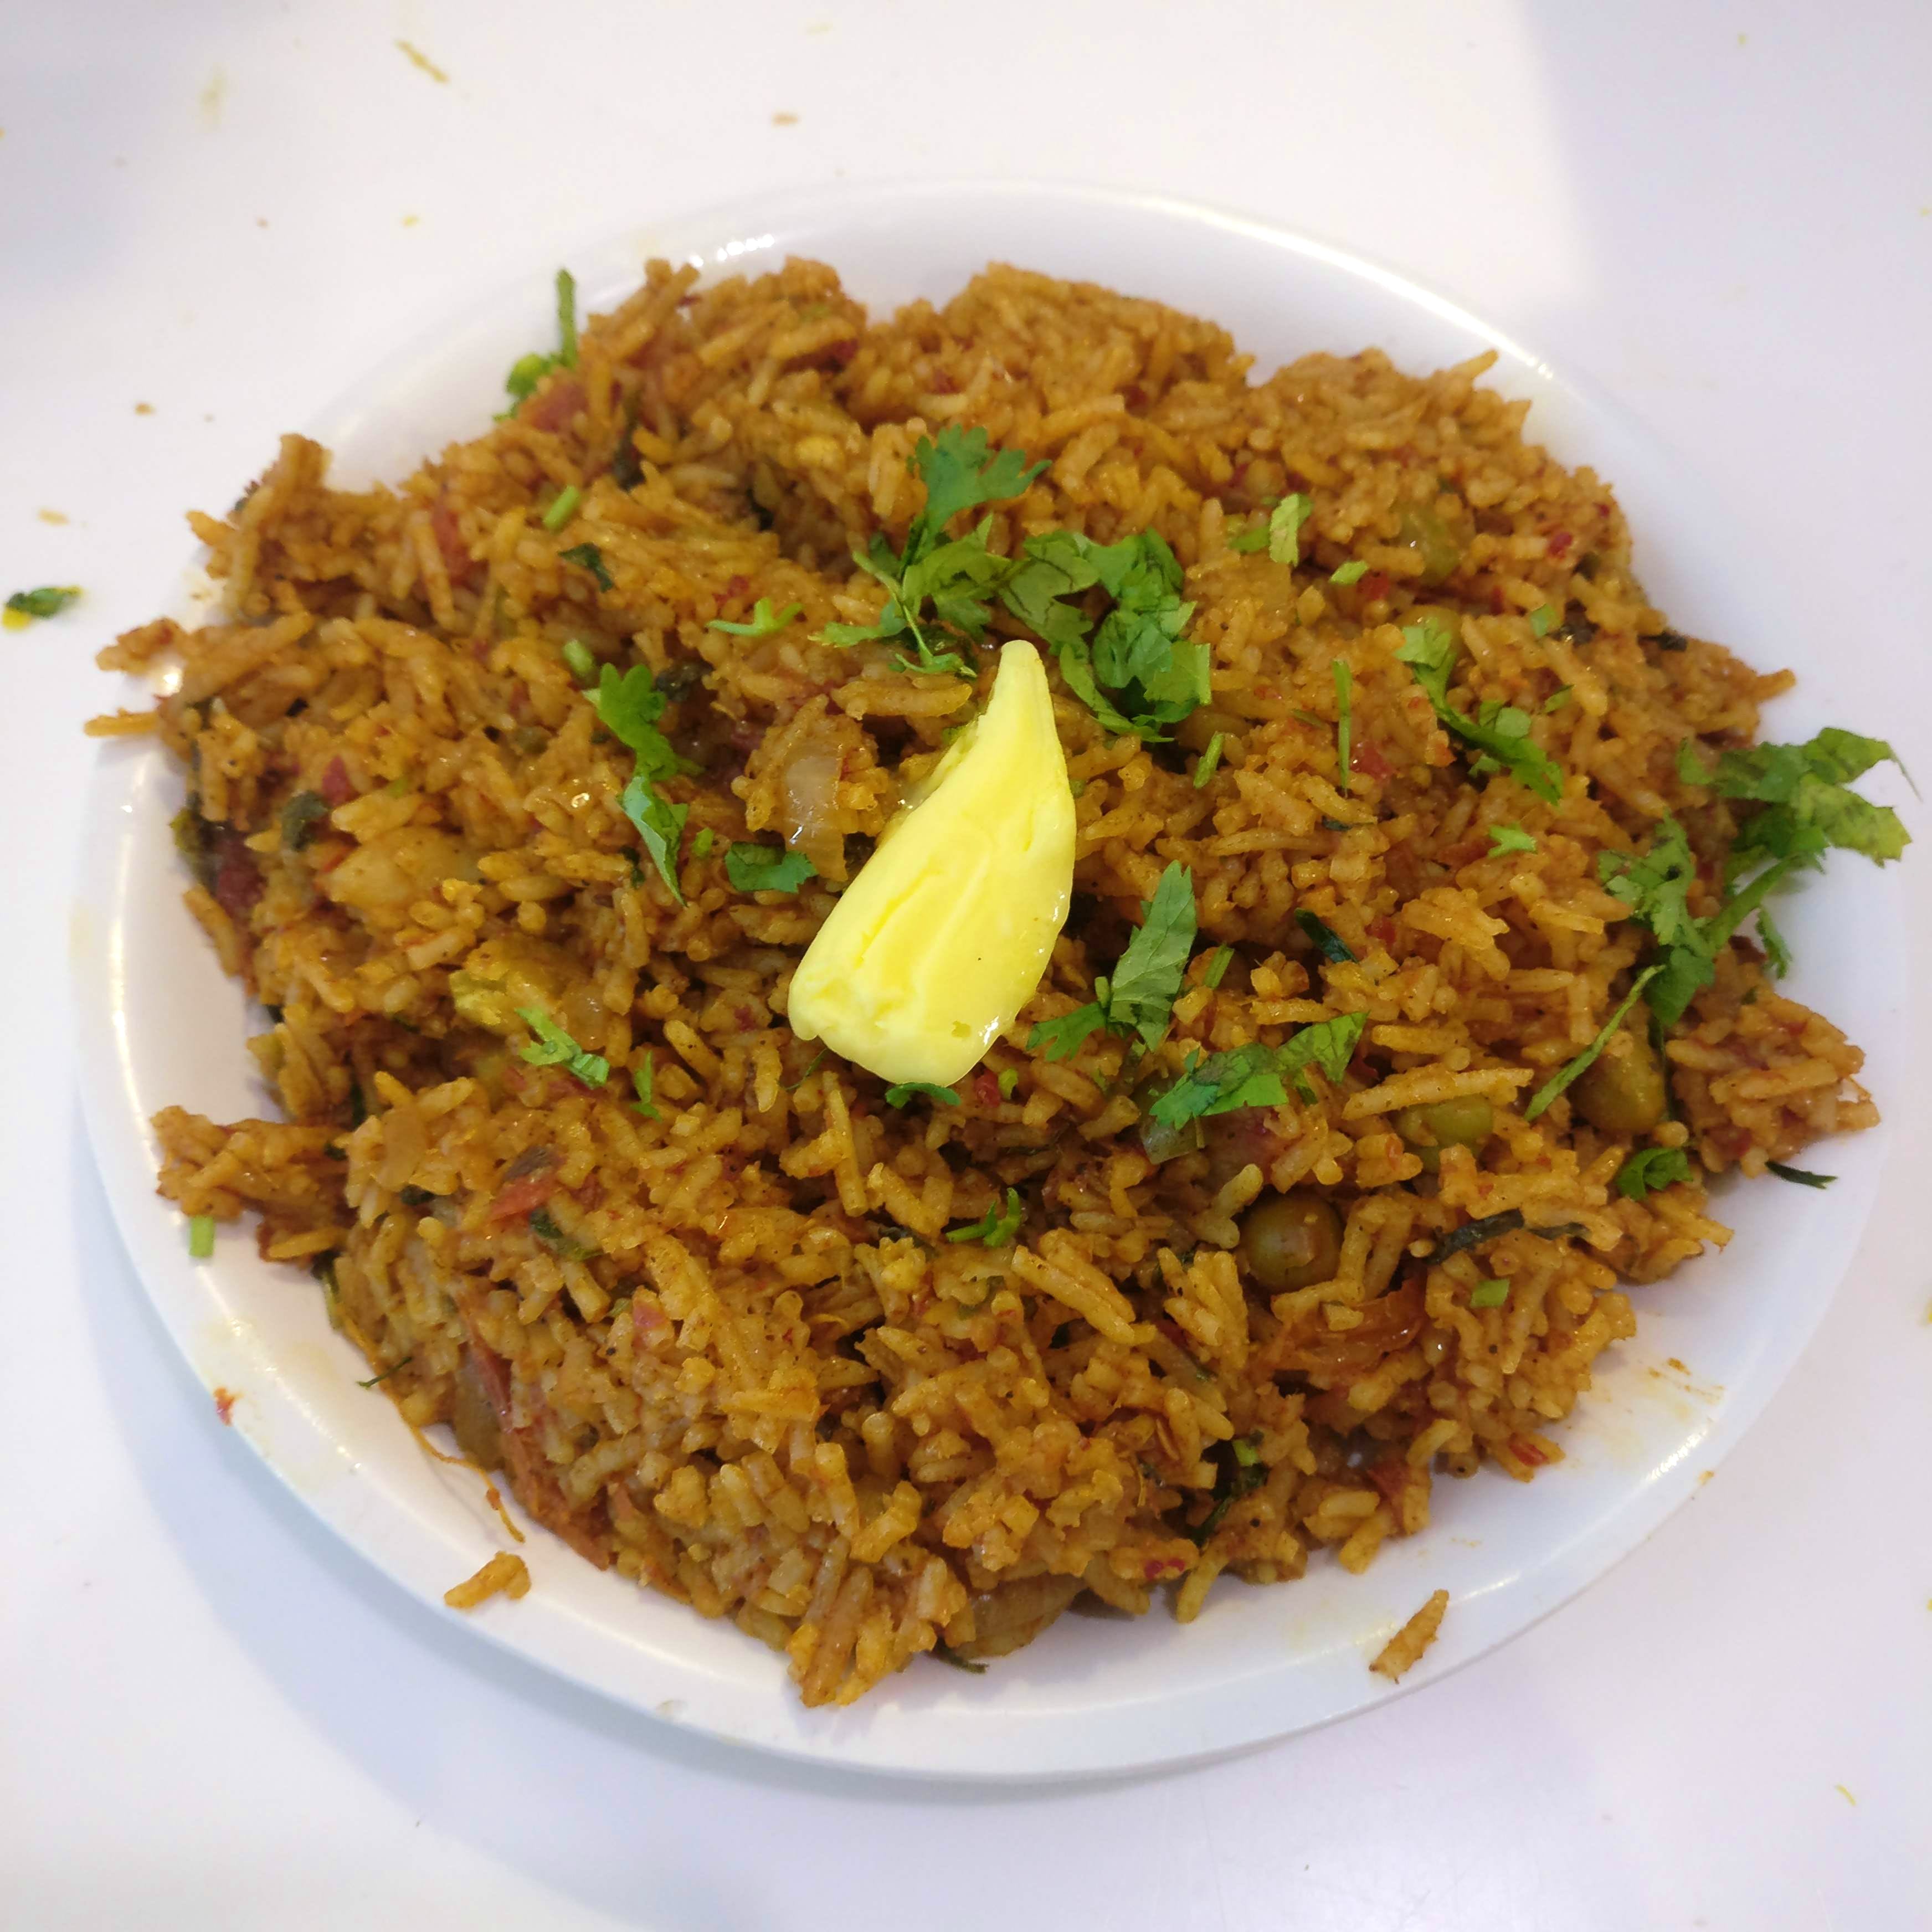 Cuisine,Puliyogare,Dish,Food,Thai fried rice,Spiced rice,Rice,Biryani,Ingredient,Hyderabadi biriyani